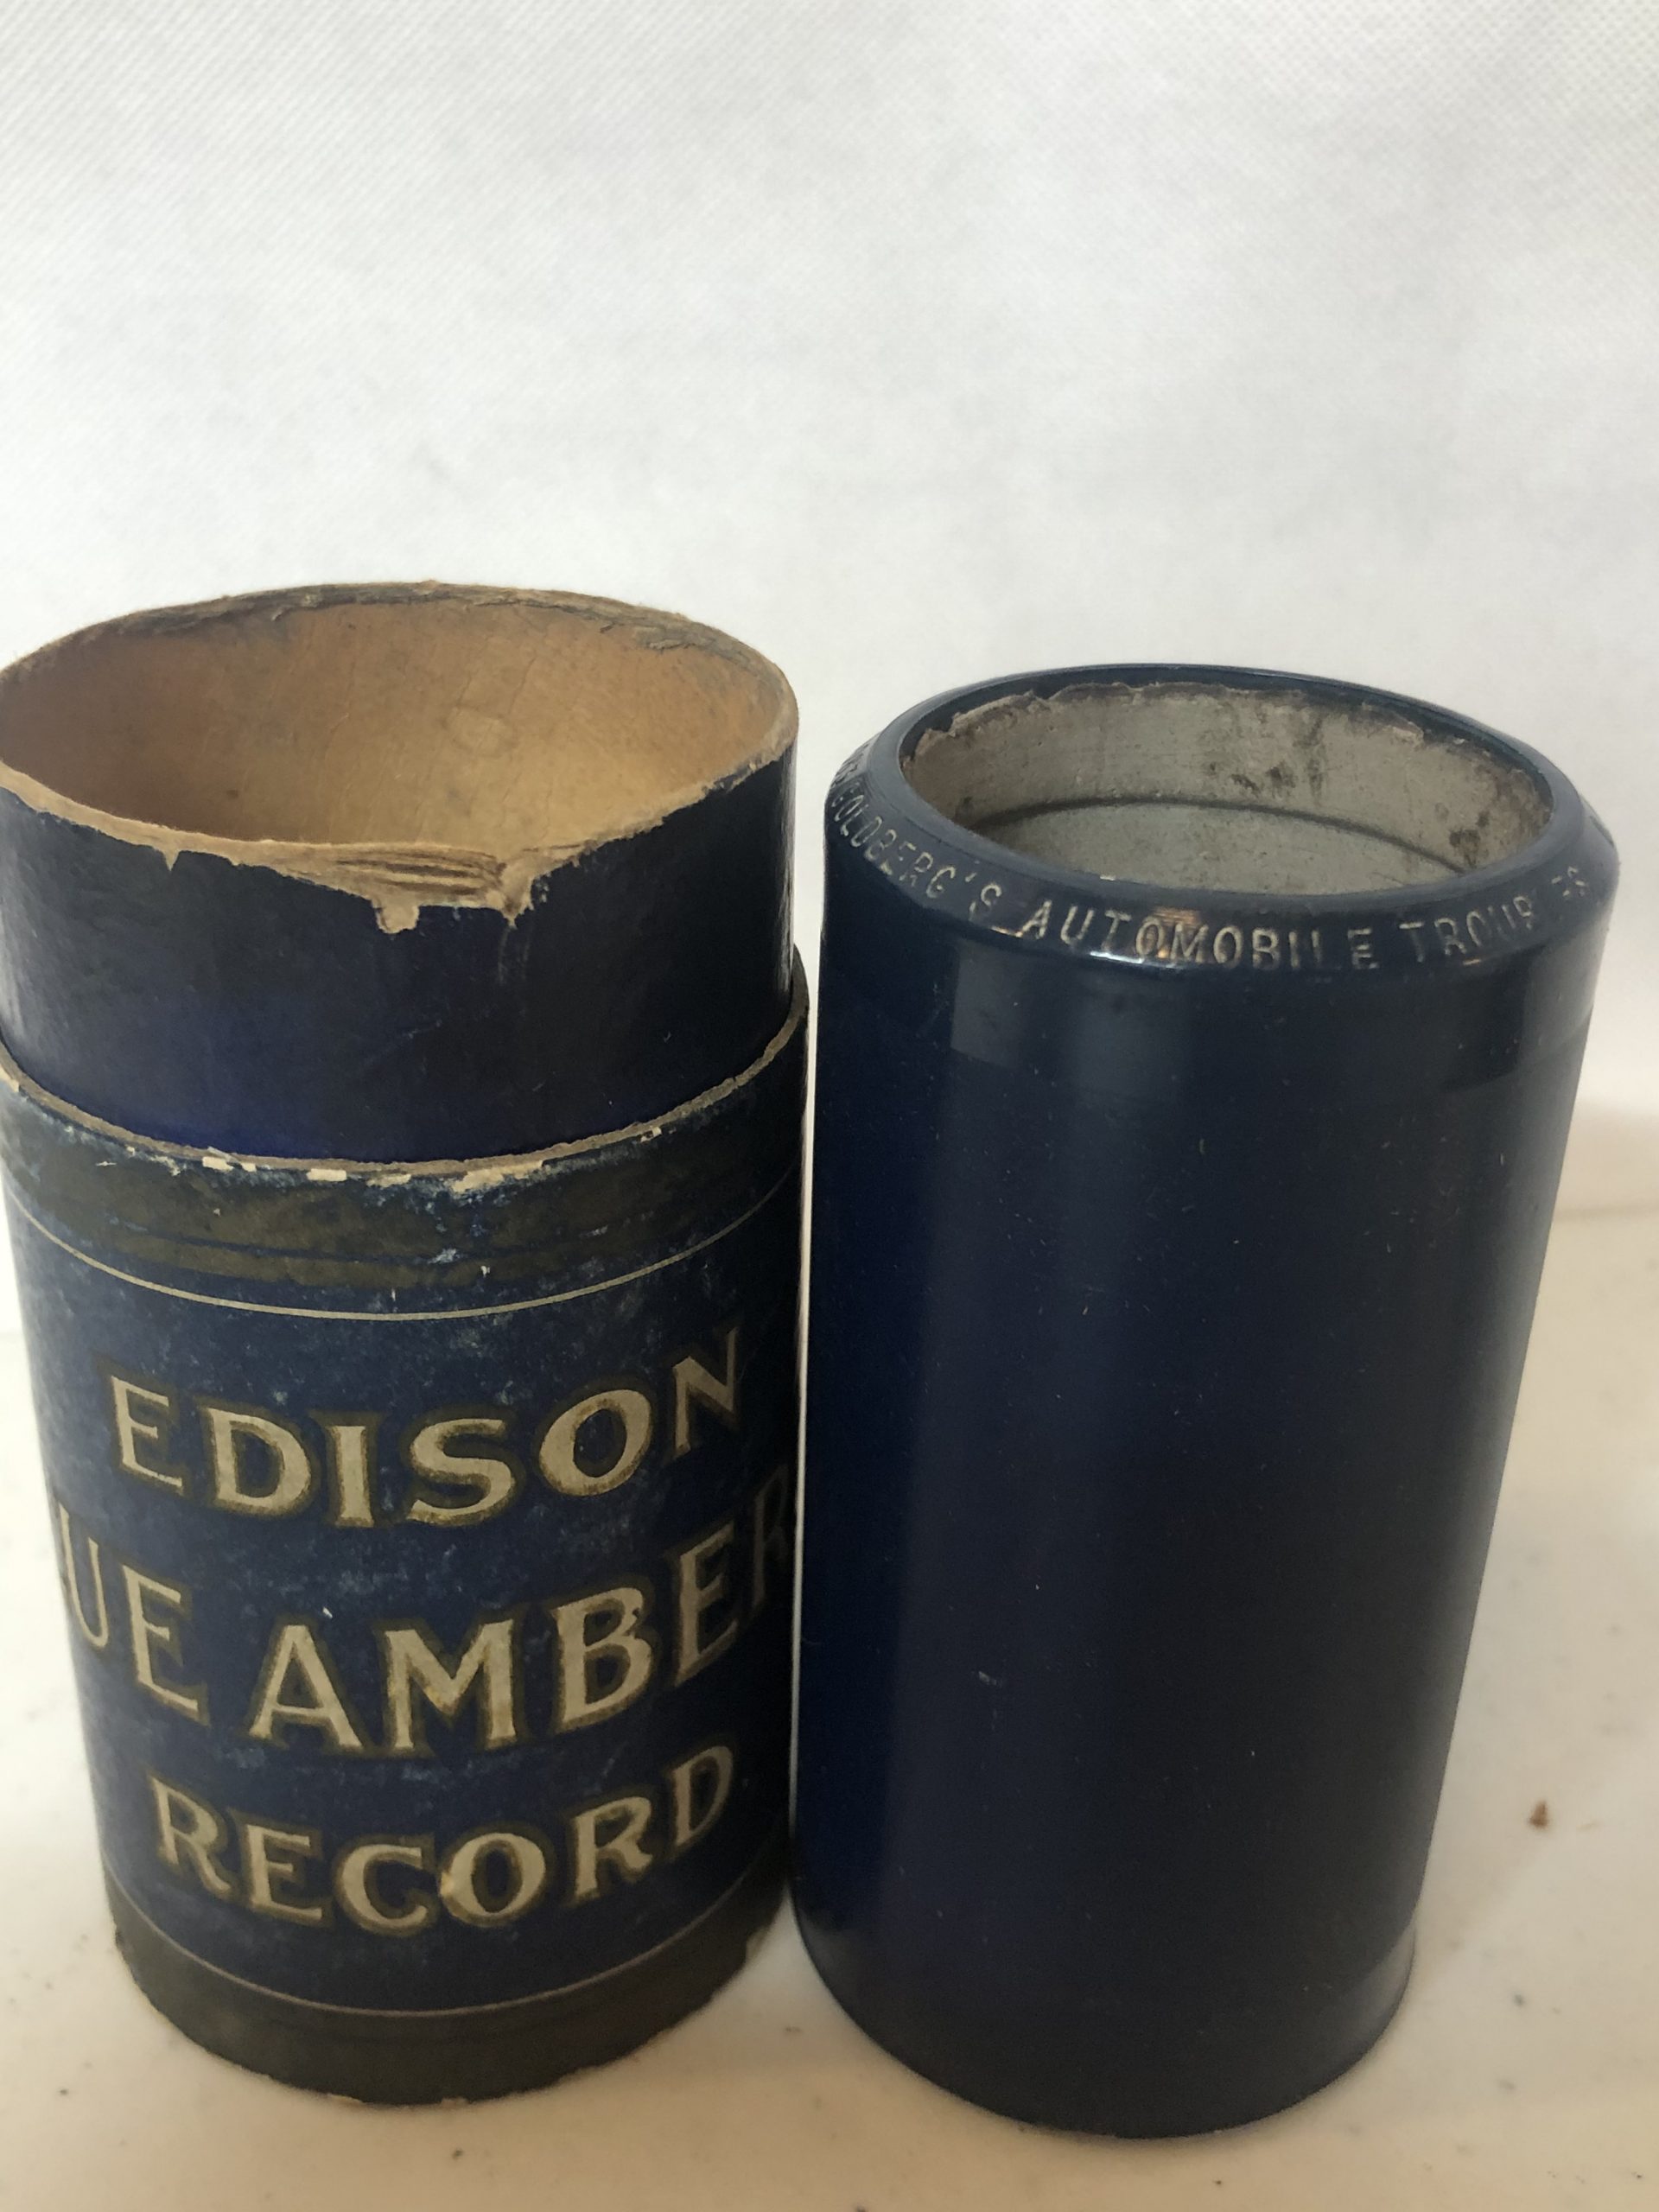 Edison 4 minute Cylinder- “Goldberg’s Automotive Troubles”